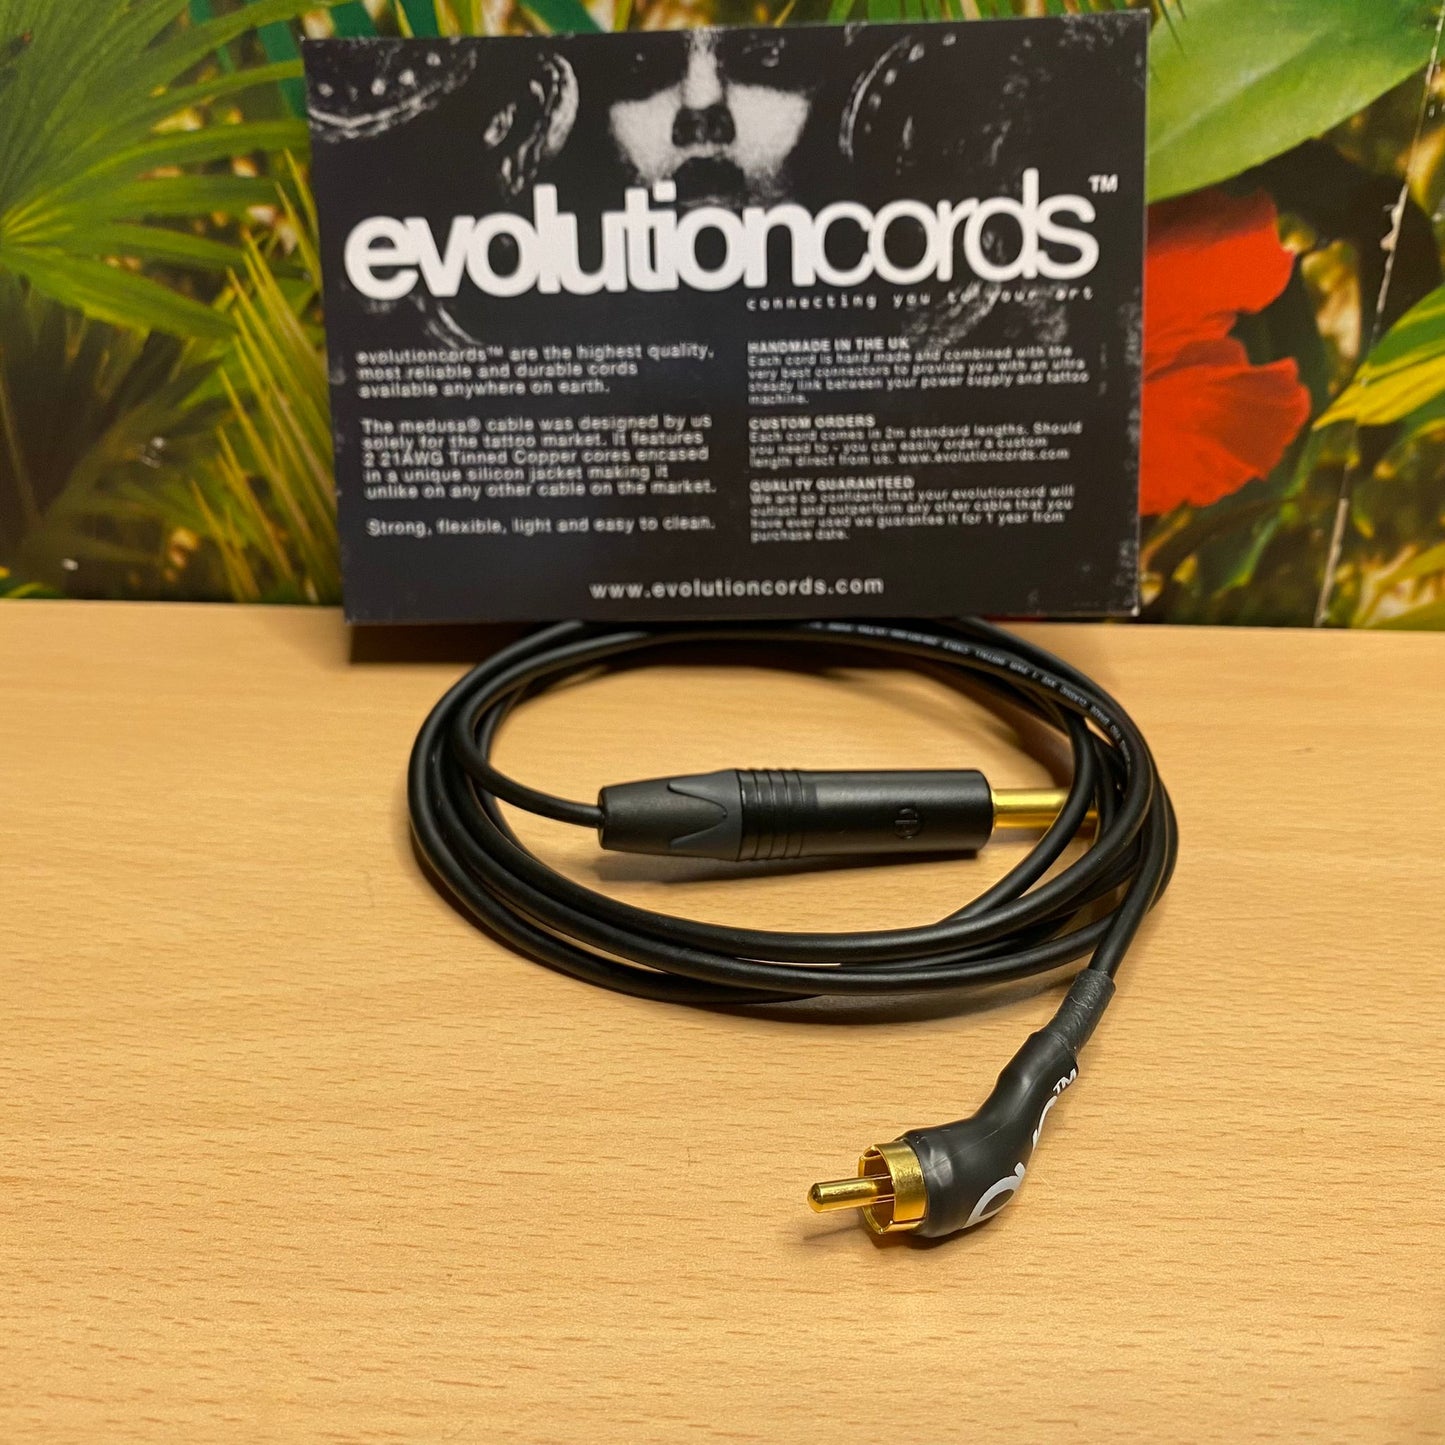 Evolution Cords - RCA Cable (45 degree angle)